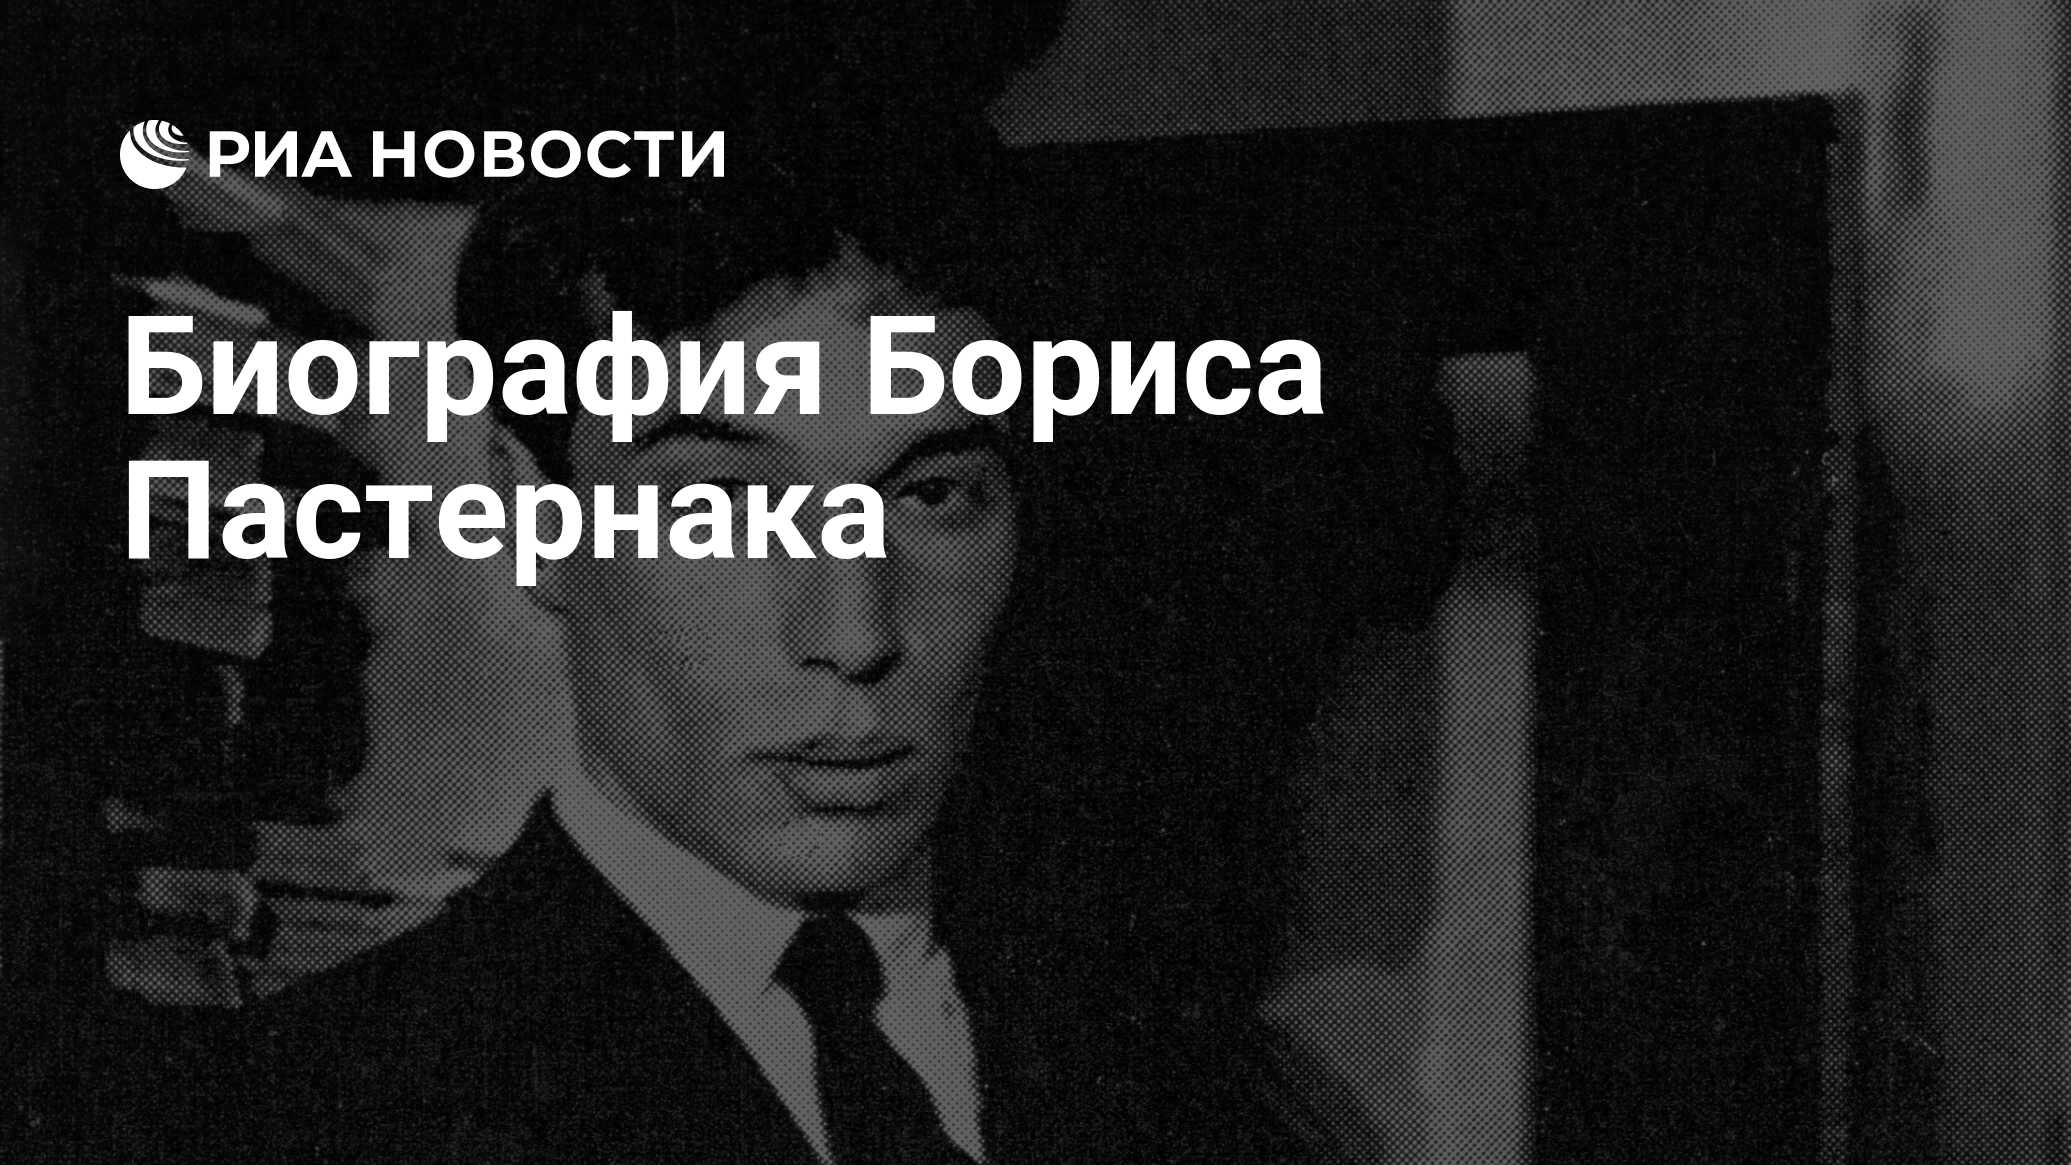 Биография Бориса Пастернака - РИА Новости, 10.02.2020